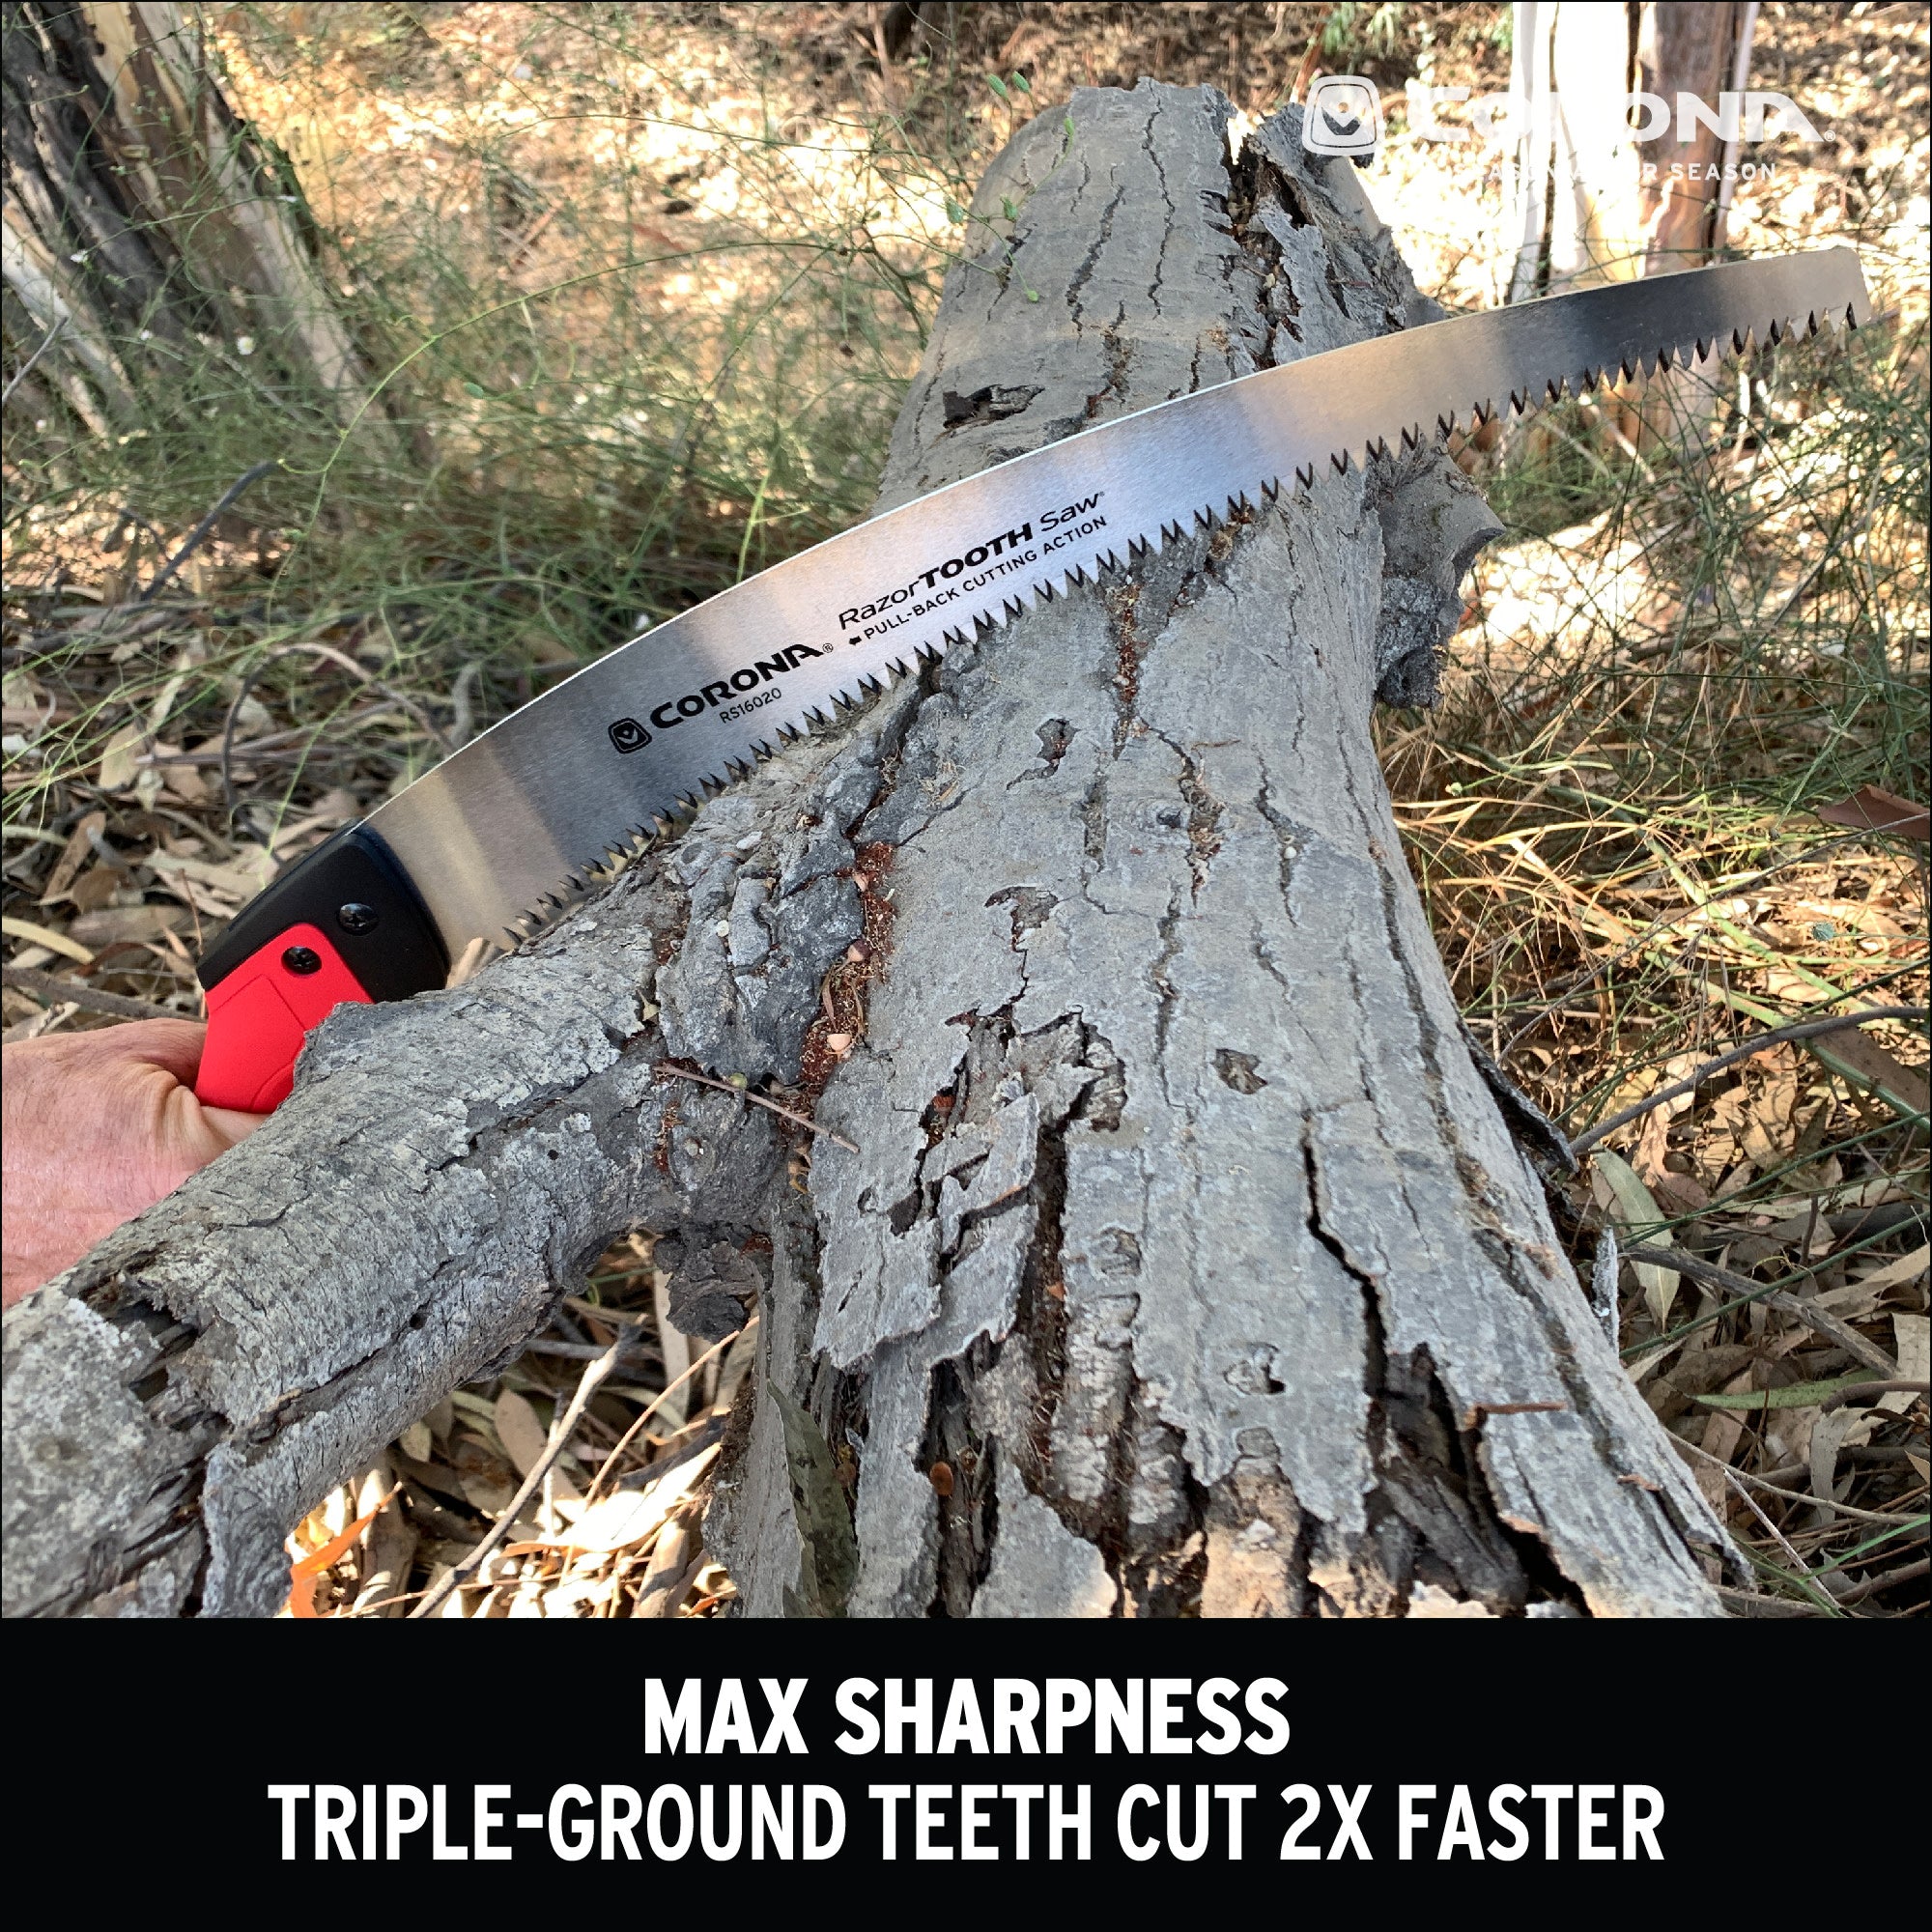 RazorTOOTH Saw® Pruning Saw, 14 in. Blade